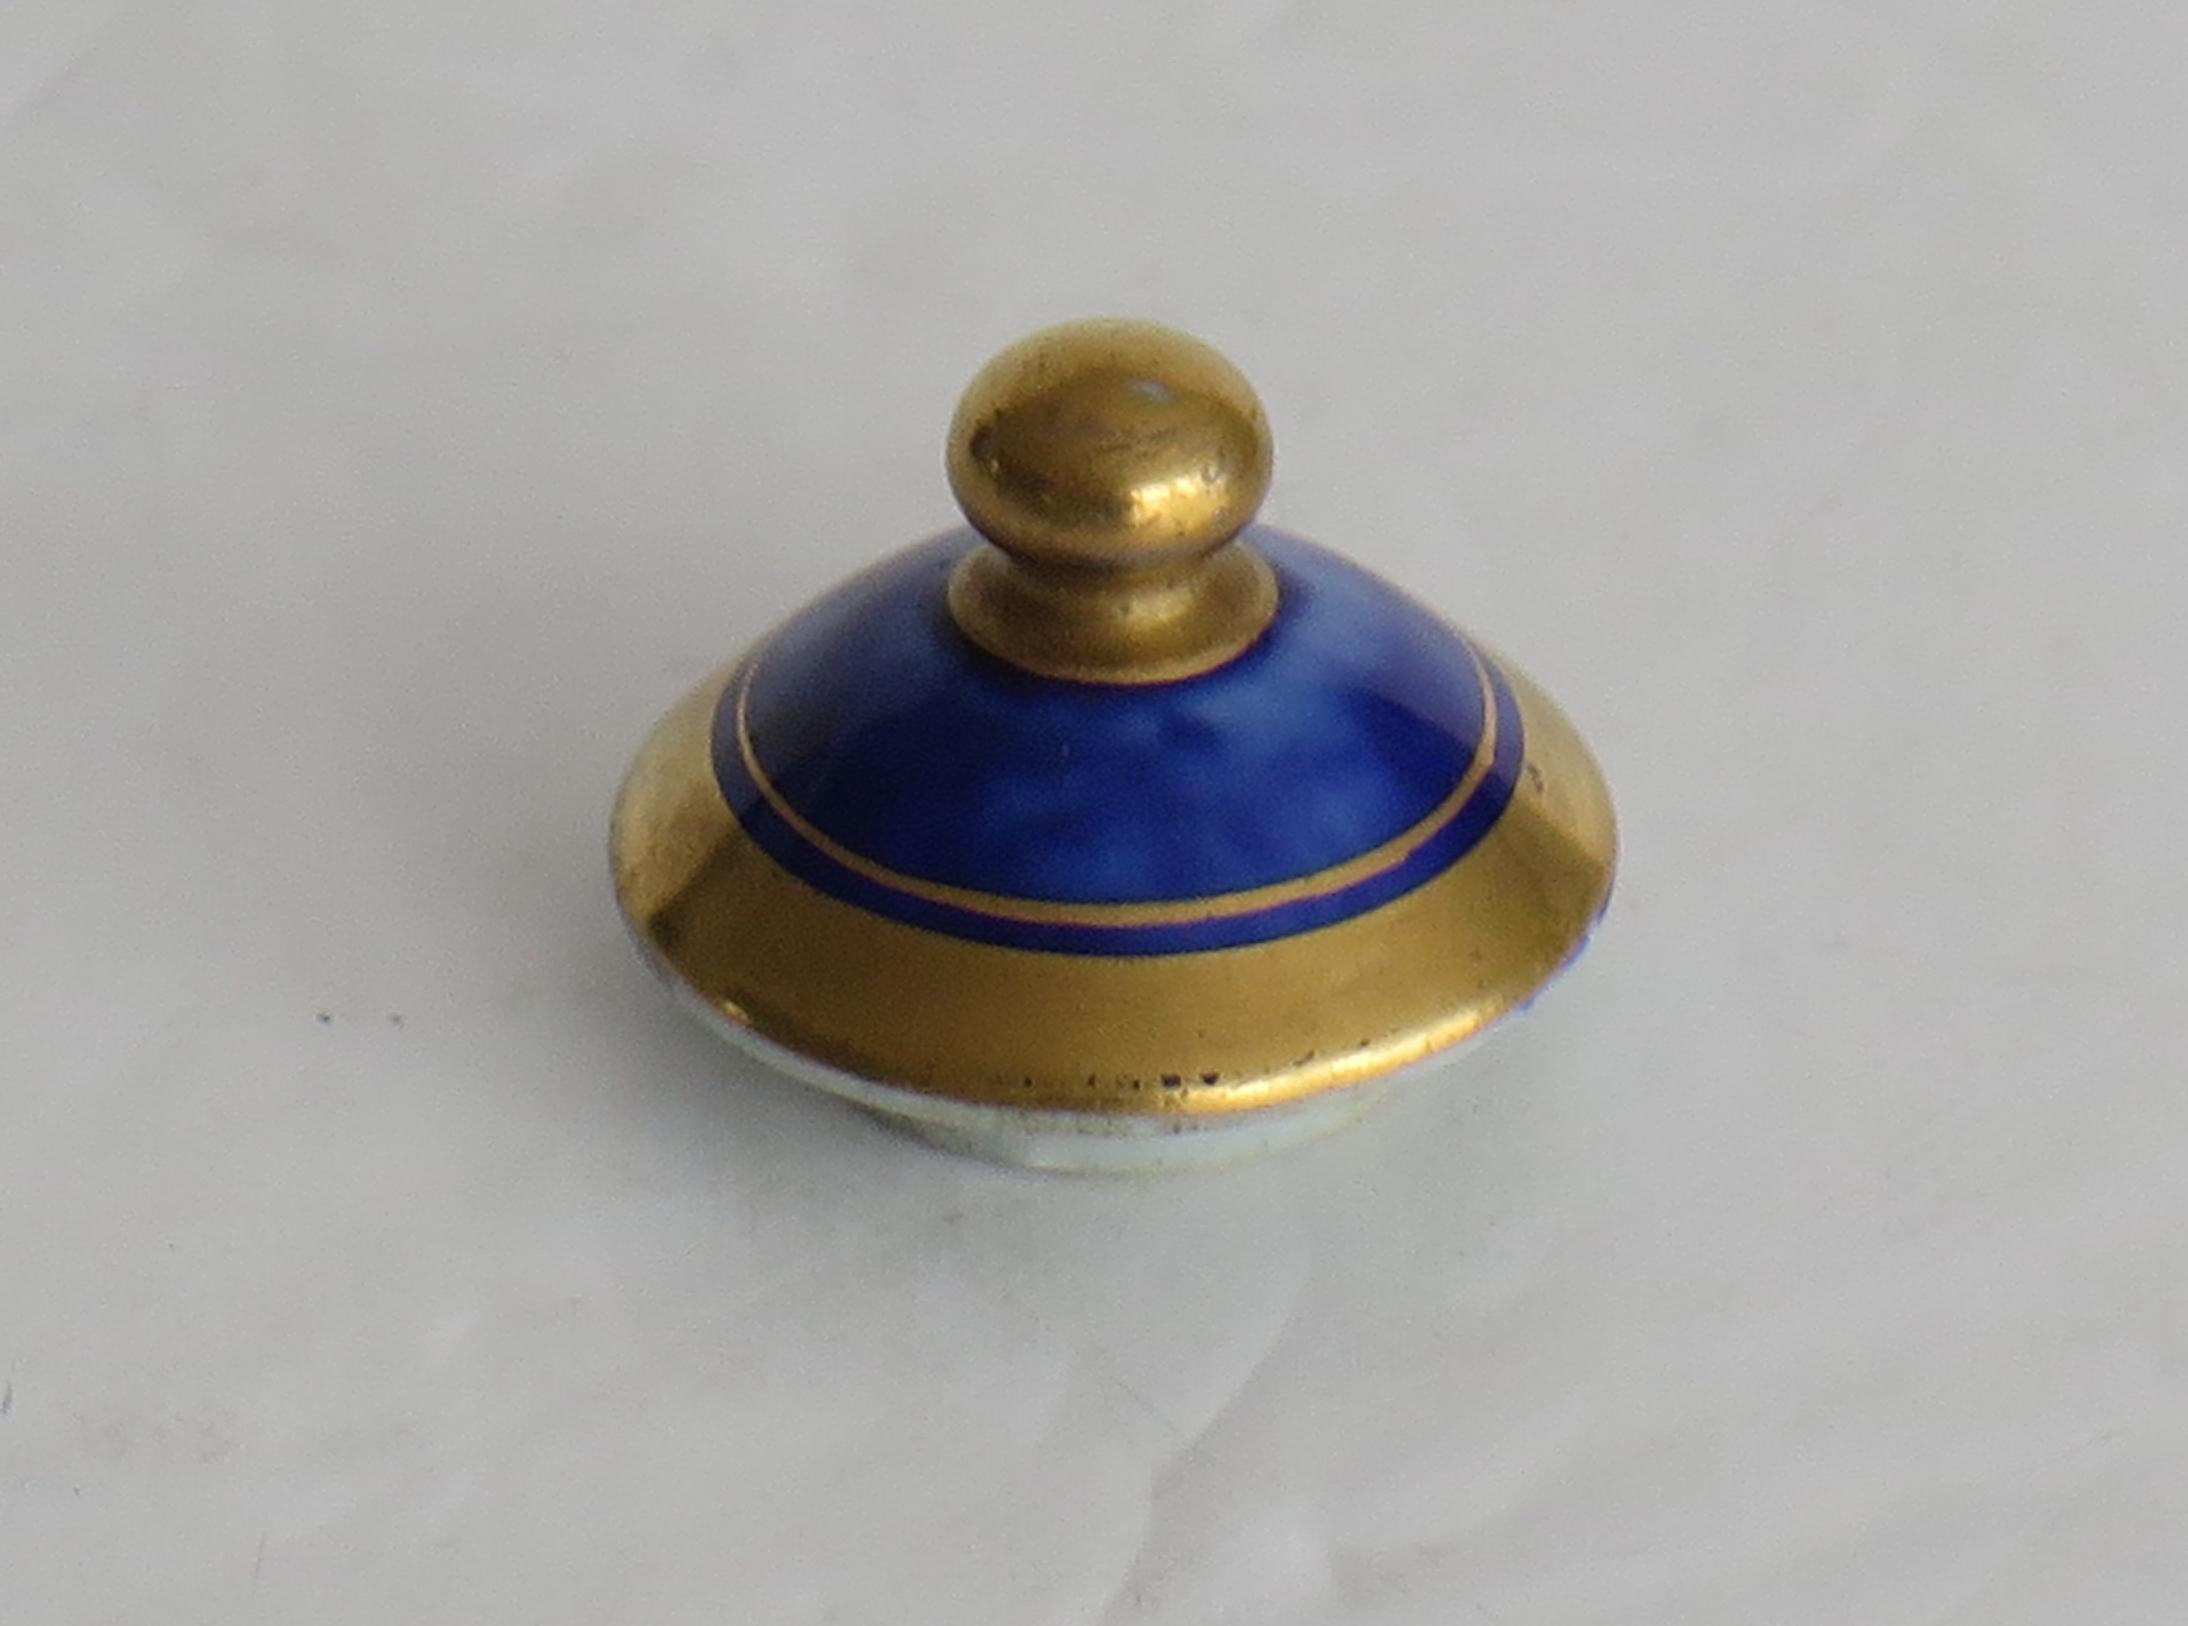 Rare Mason's Ironstone Miniature Urn in Gold Rose Japan Pattern, circa 1820 For Sale 2